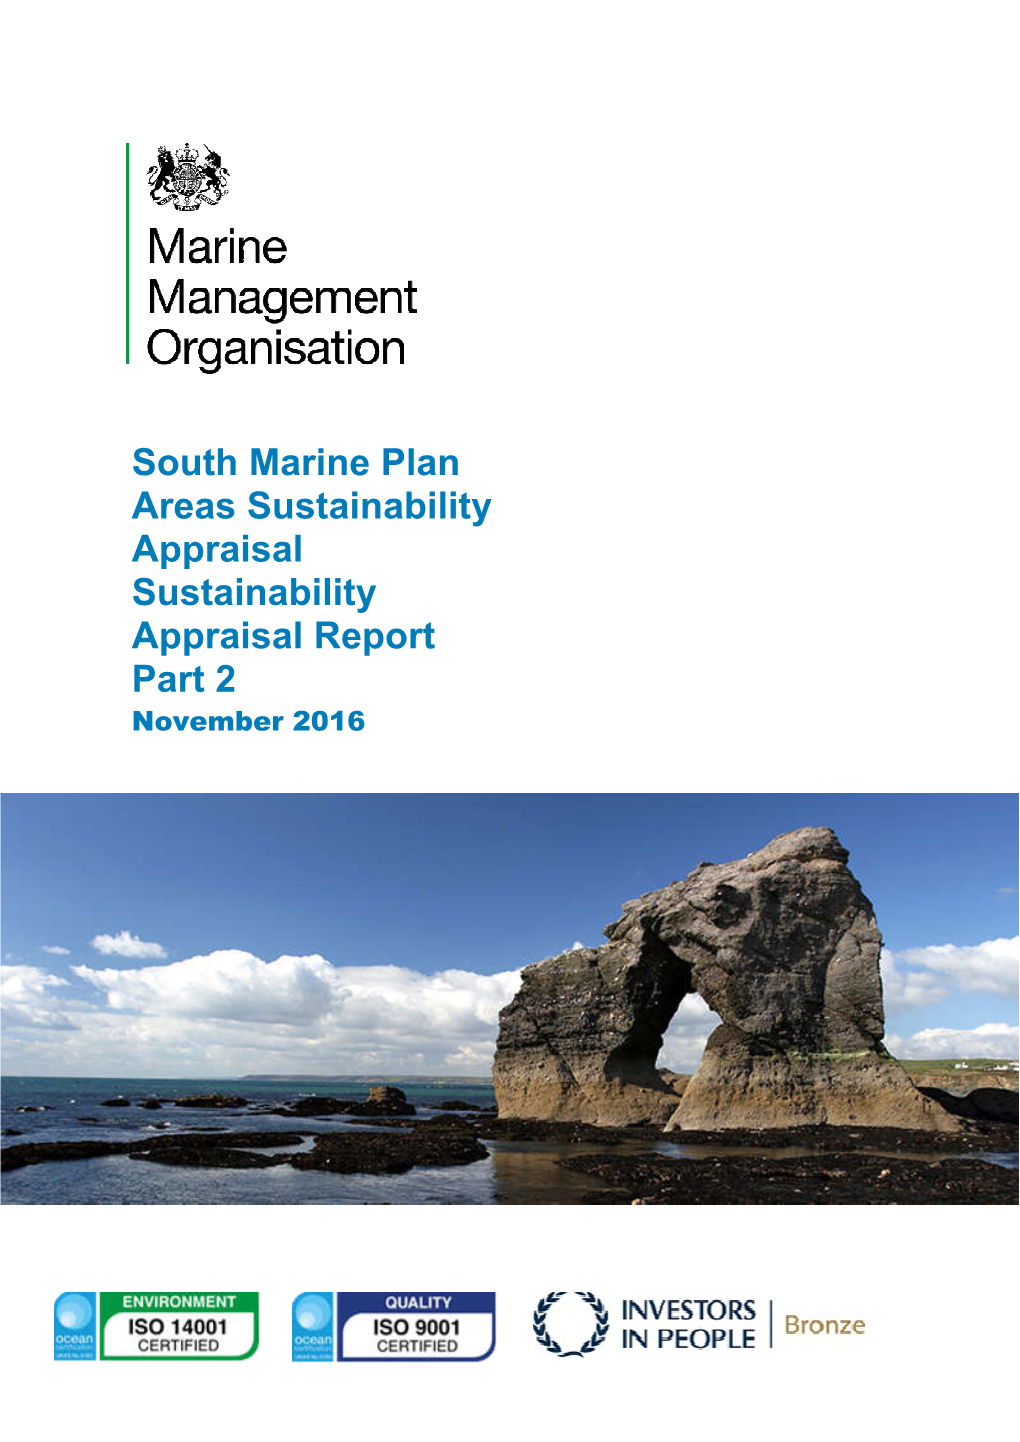 South Marine Plan Areas Sustainability Appraisal Sustainability Appraisal Report Part 2 November 2016